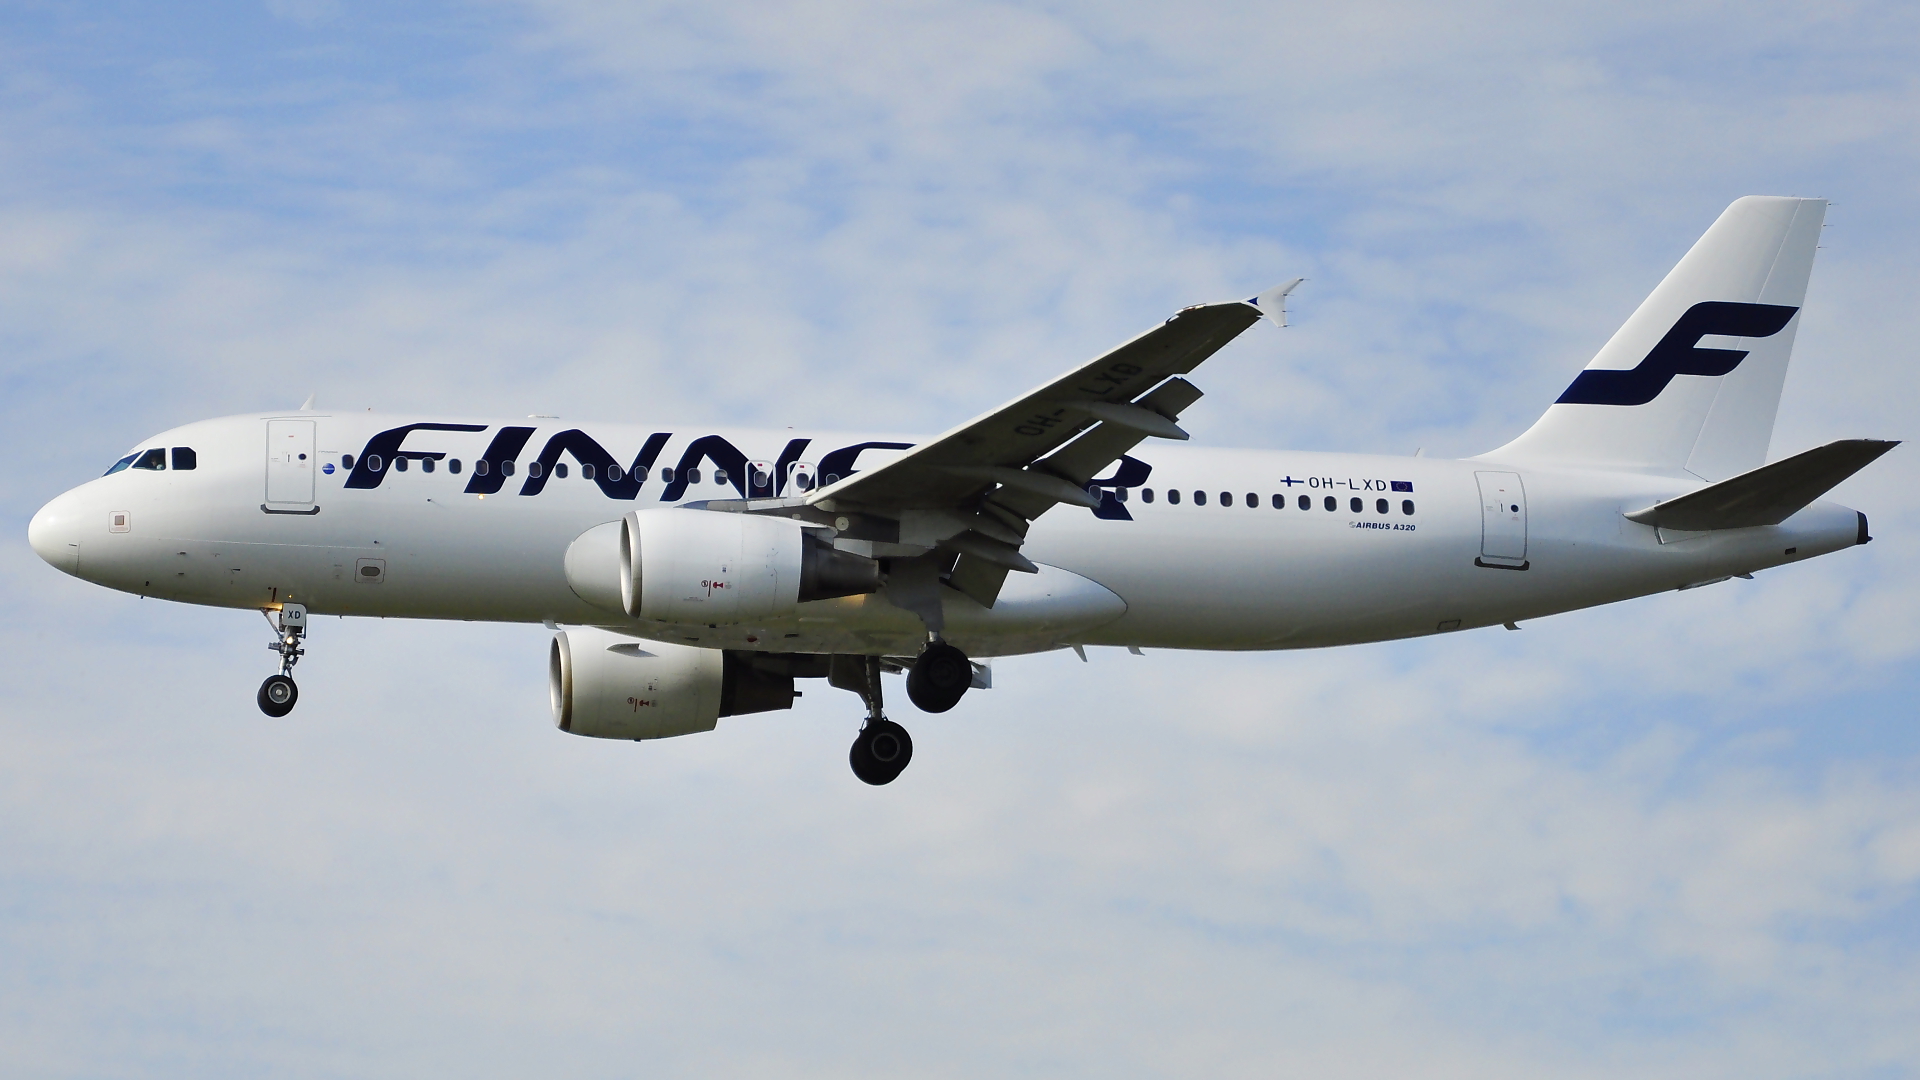 OH-LXD ✈ Finnair Airbus 320-214 @ London-Heathrow